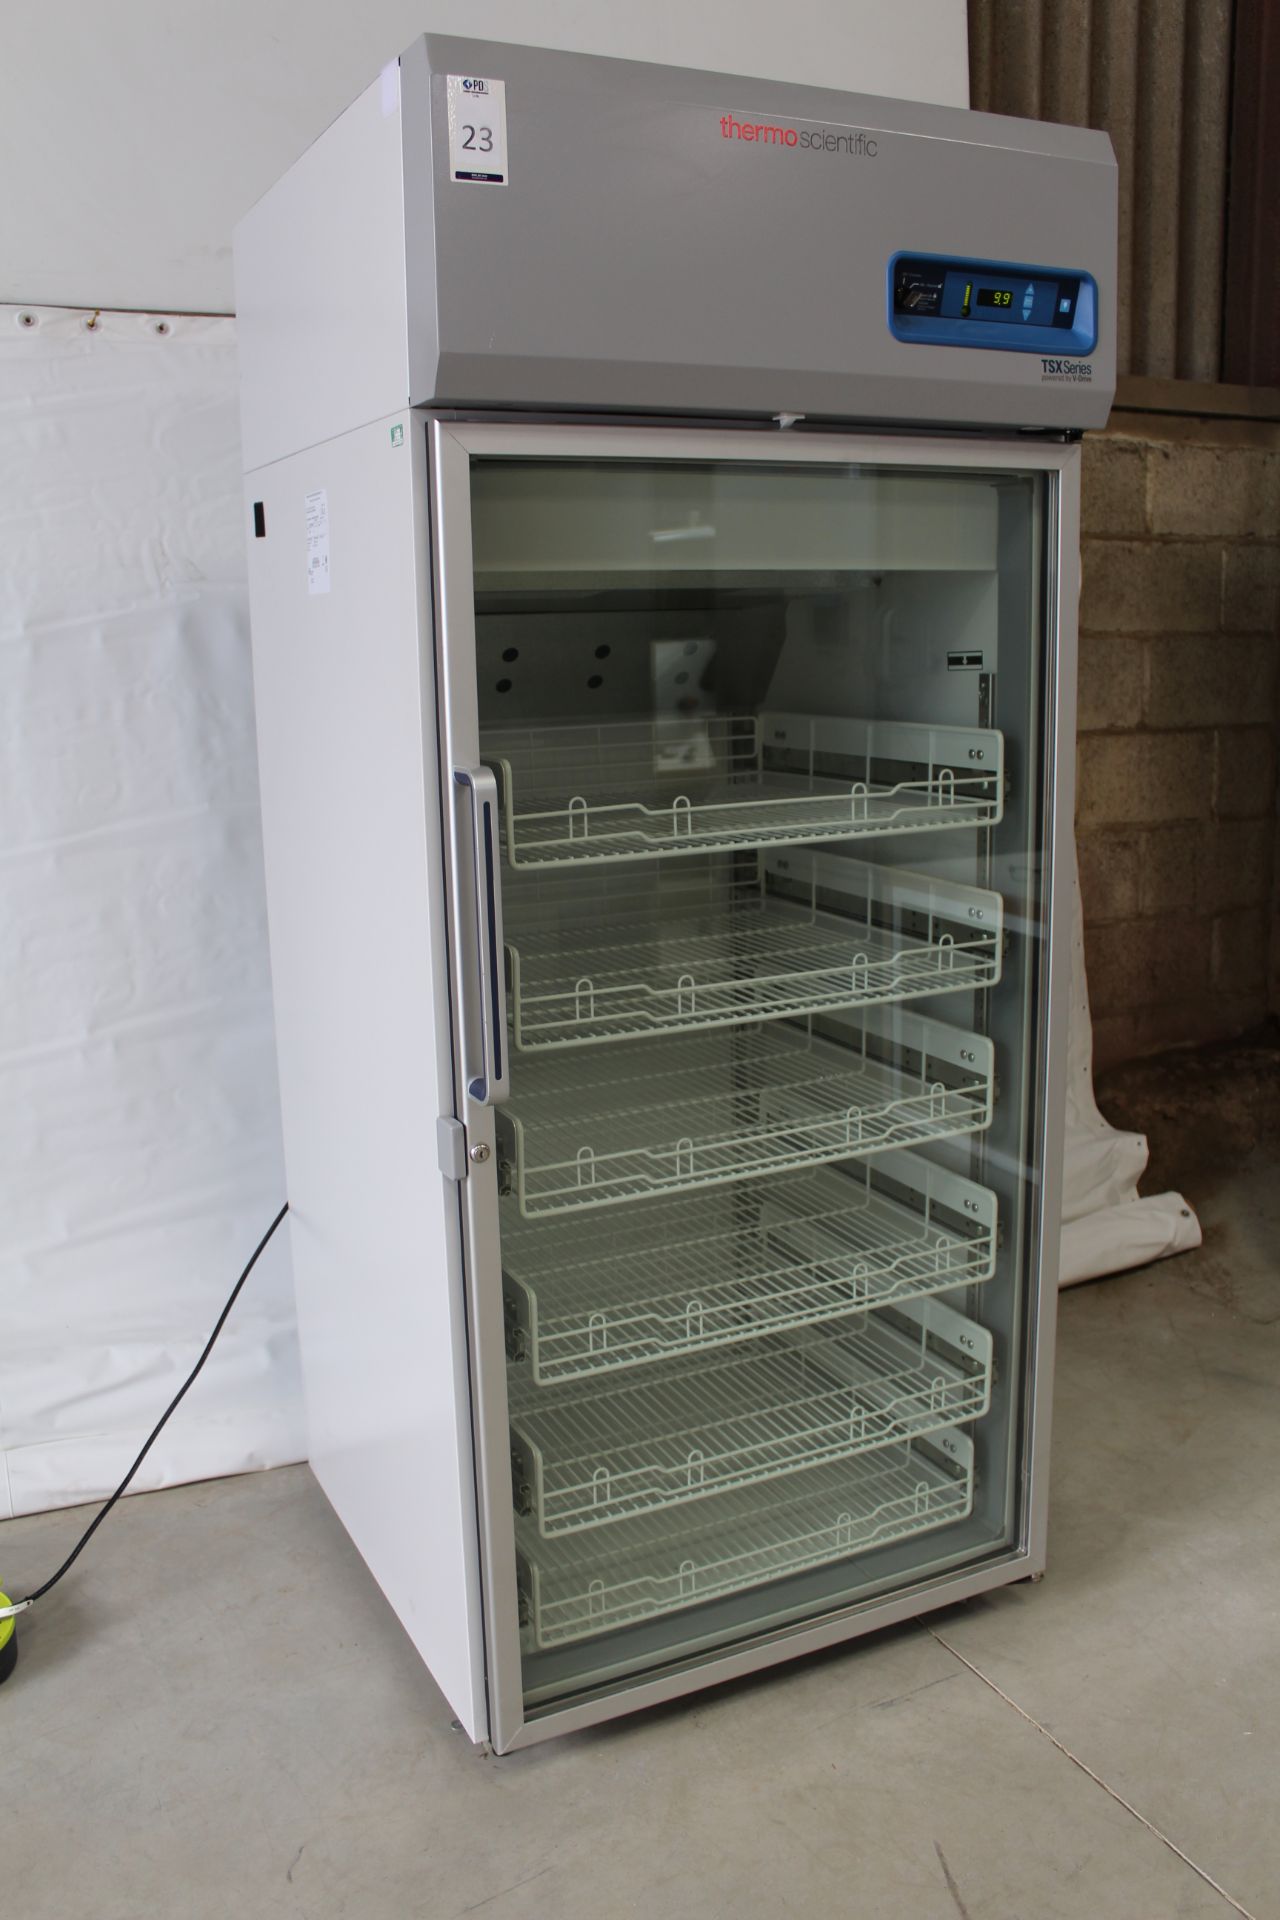 Thermo Scientific TSX3005PV High Performance Lab Refrigerator. SN 1123733401191112 (Location: